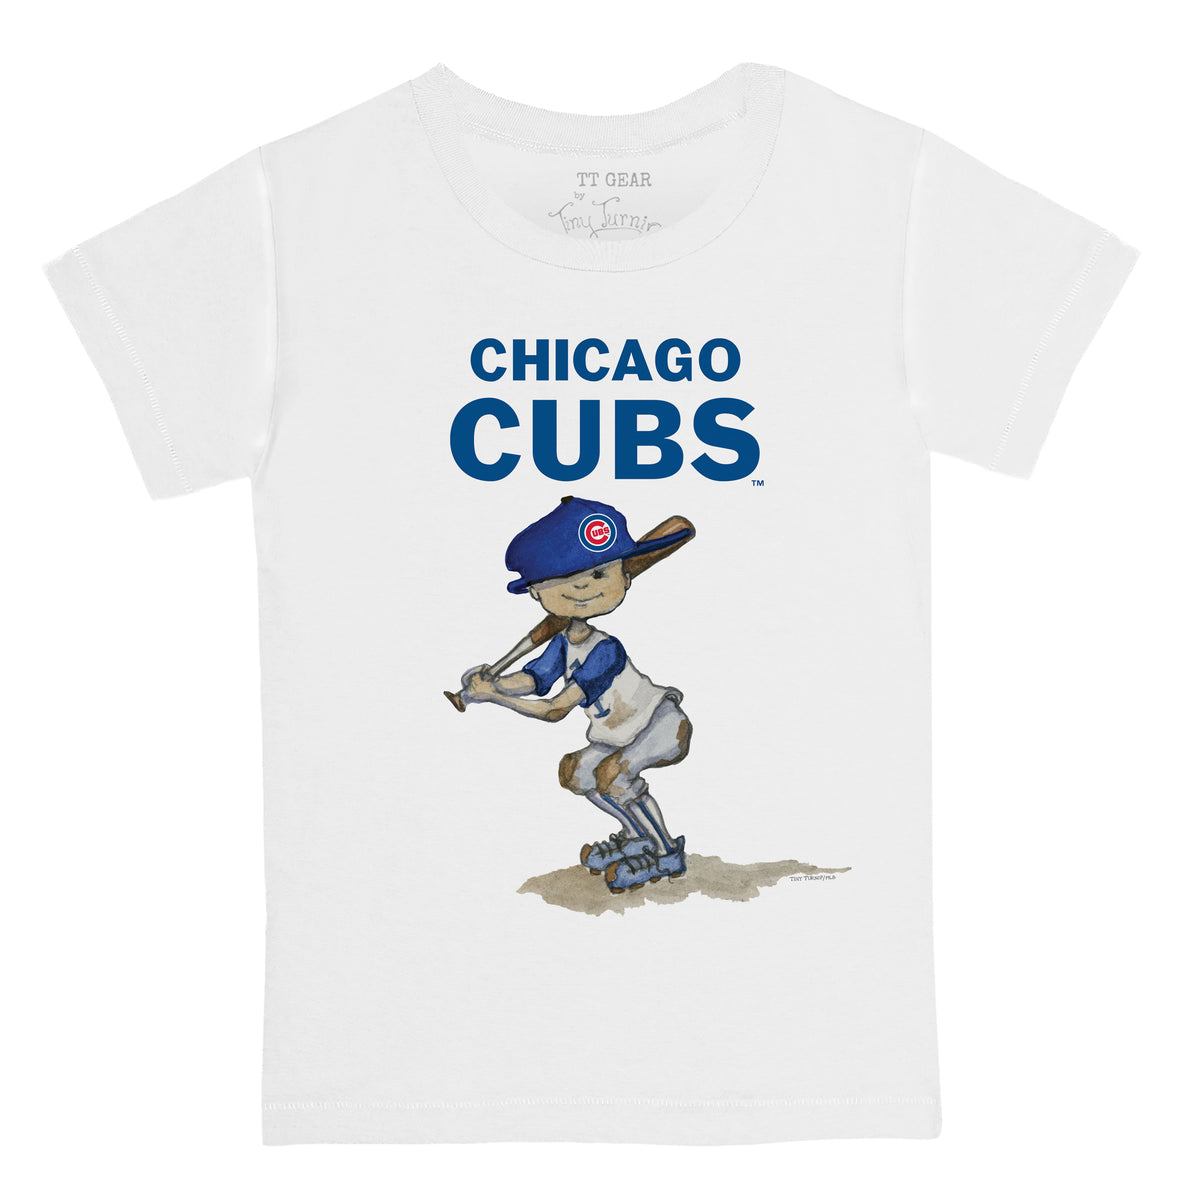 Unisex Tiny Turnip White/Royal Chicago Cubs Triple Scoop 3/4-Sleeve Raglan T-Shirt